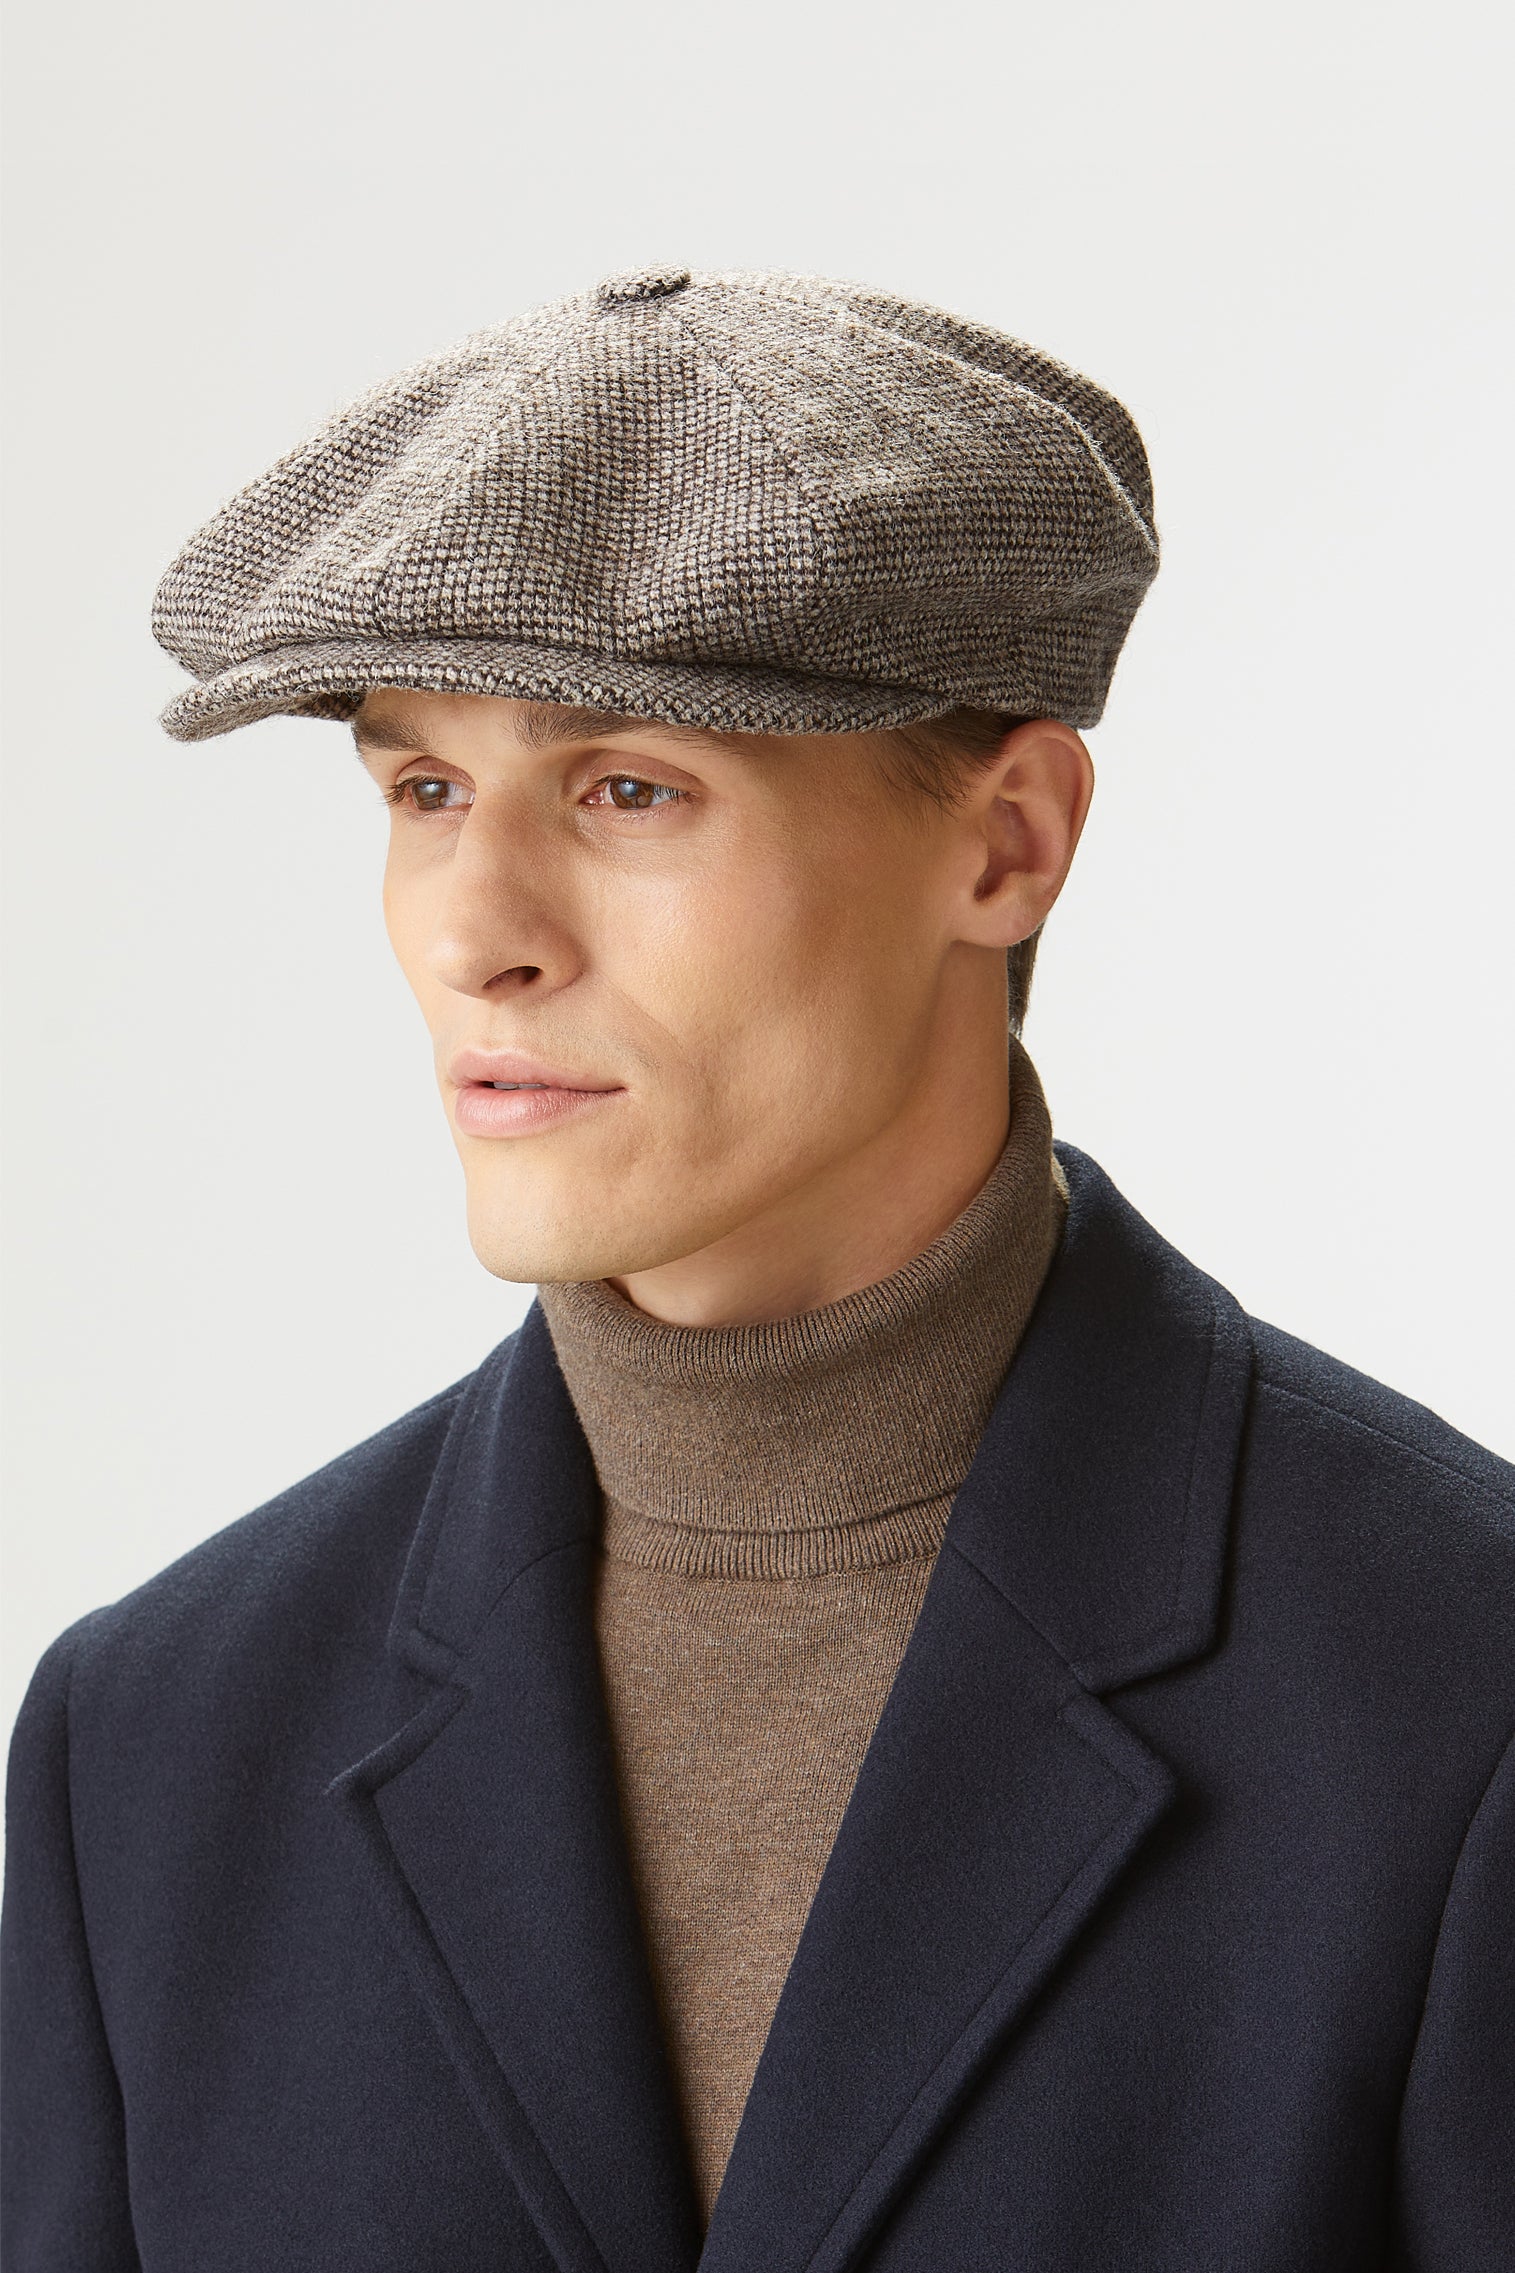 Muirfield Birdseye Bakerboy Cap - Hats for Square Face Shapes - Lock & Co. Hatters London UK